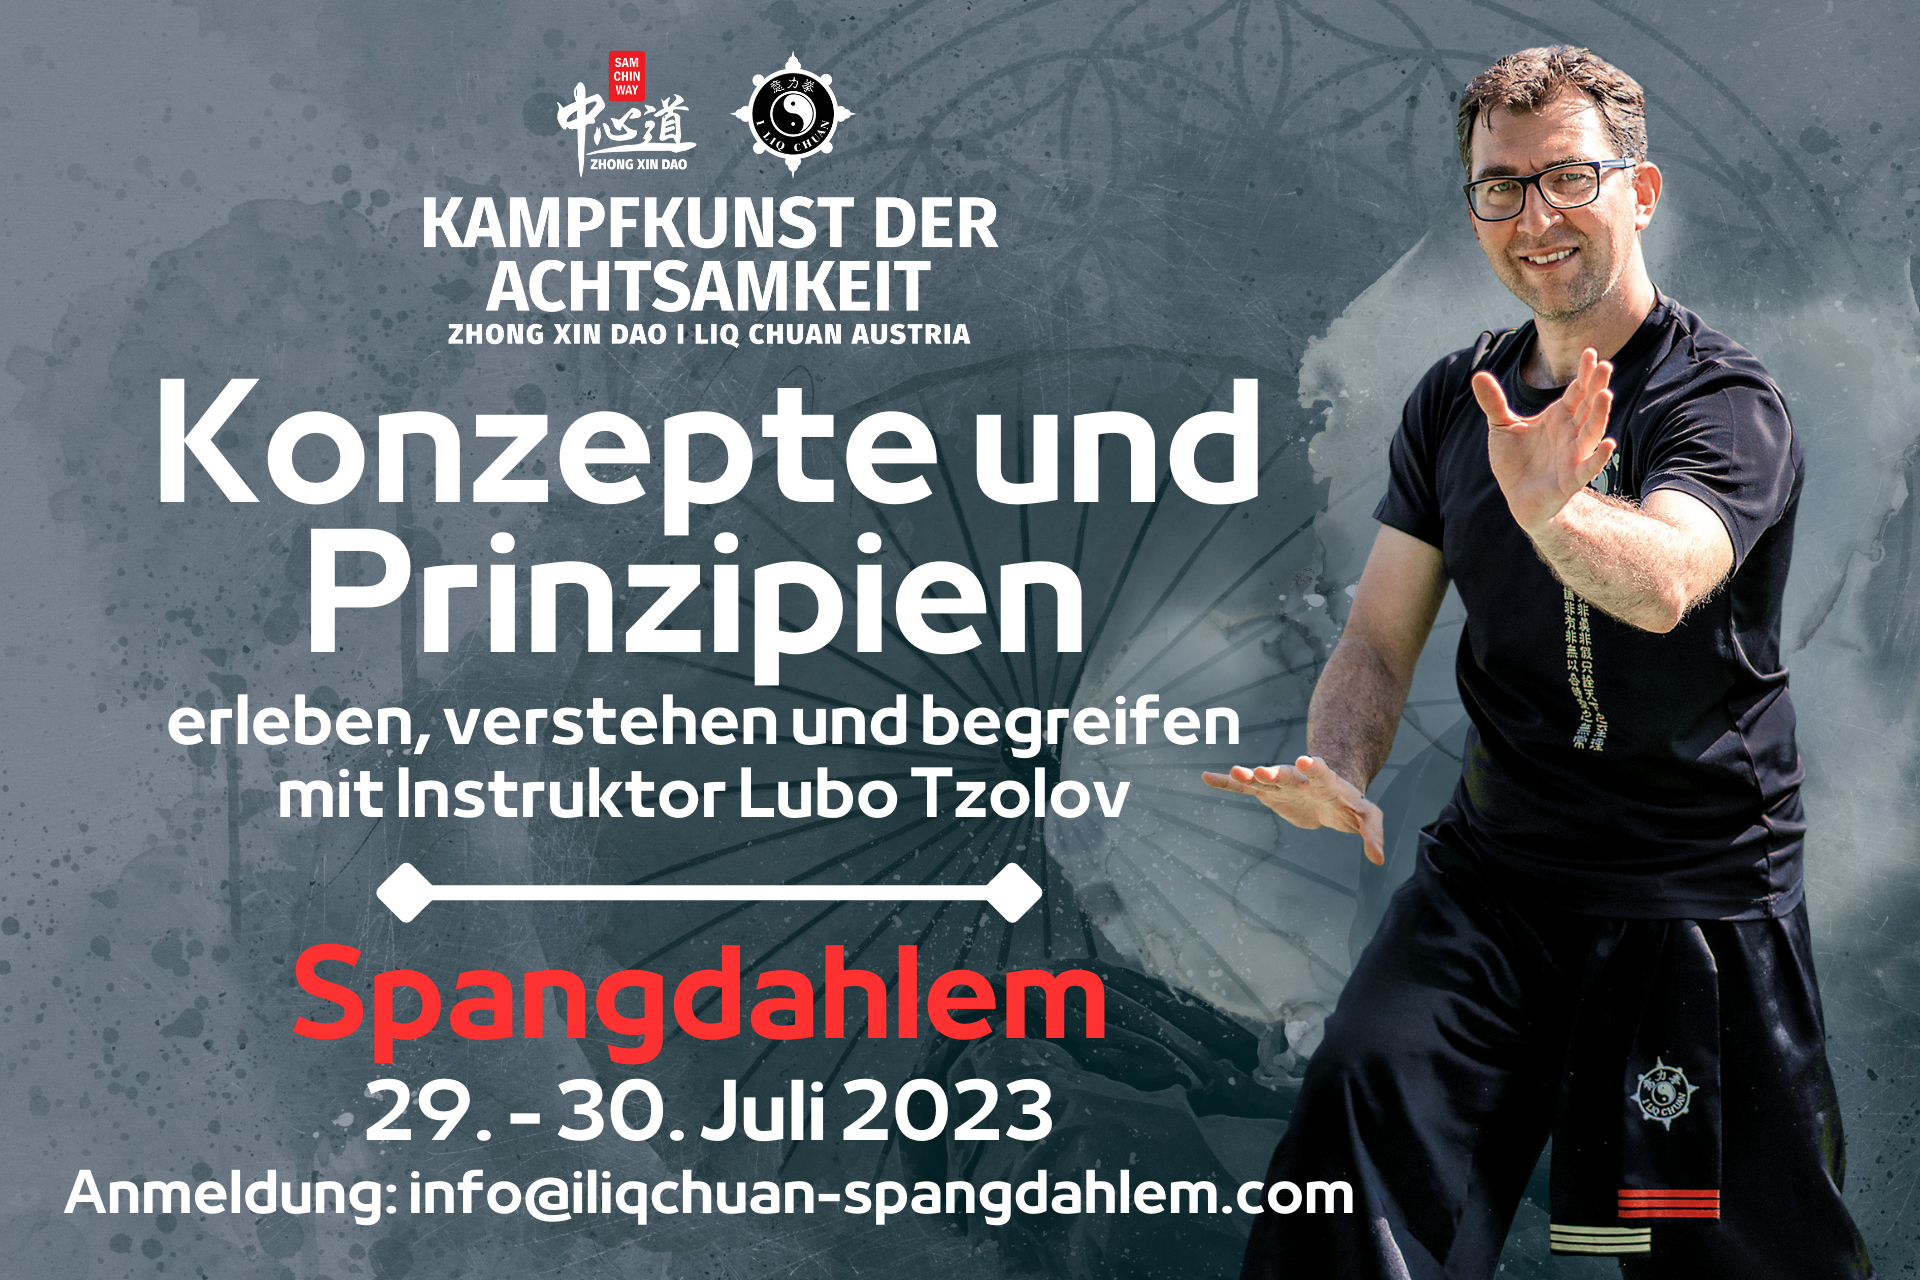 [Spangdahlem, Germany] Workshop with Lubo Tzolov in Spangdahlem